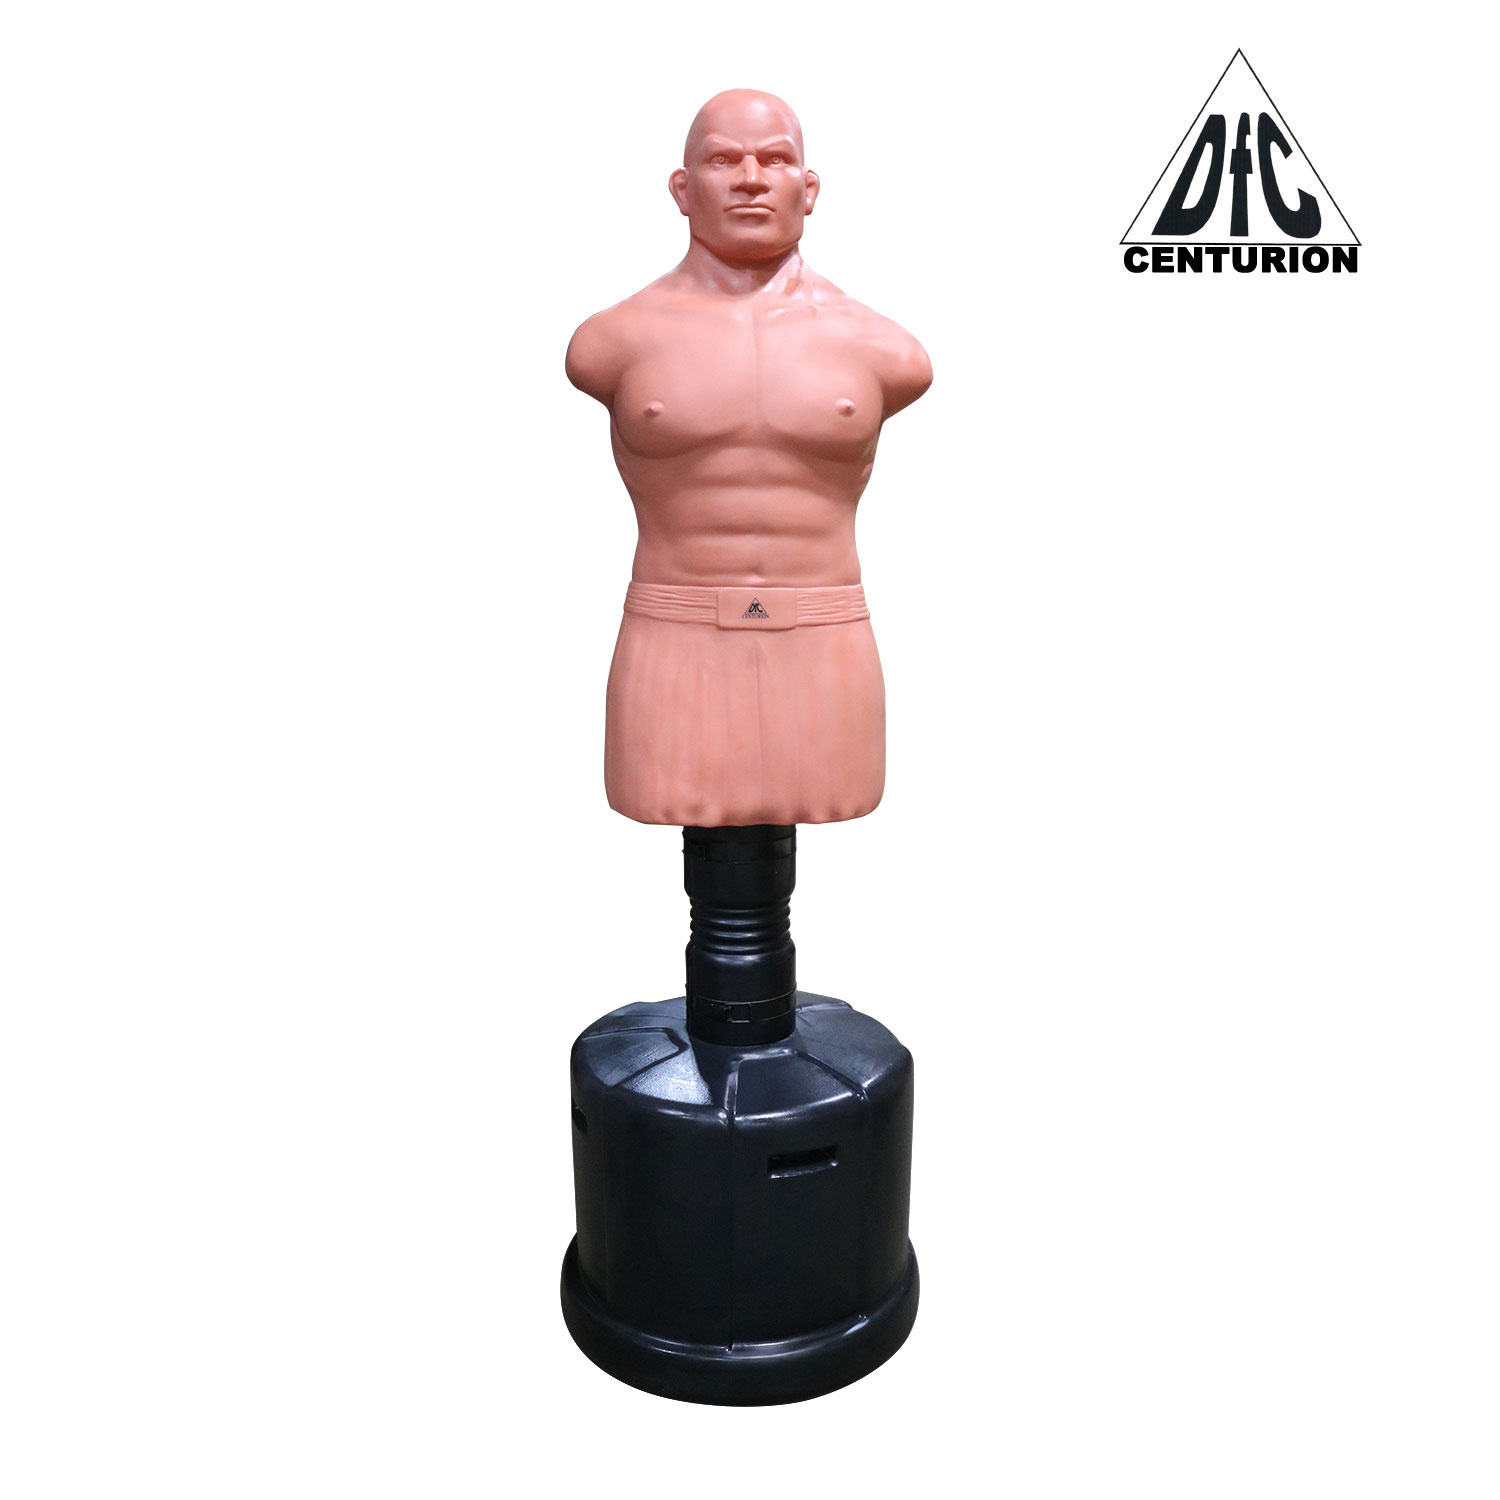 DFC Centurion Boxing Punching Man-Heavy водоналивной - бежевый из каталога манекенов для бокса в Москве по цене 43990 ₽